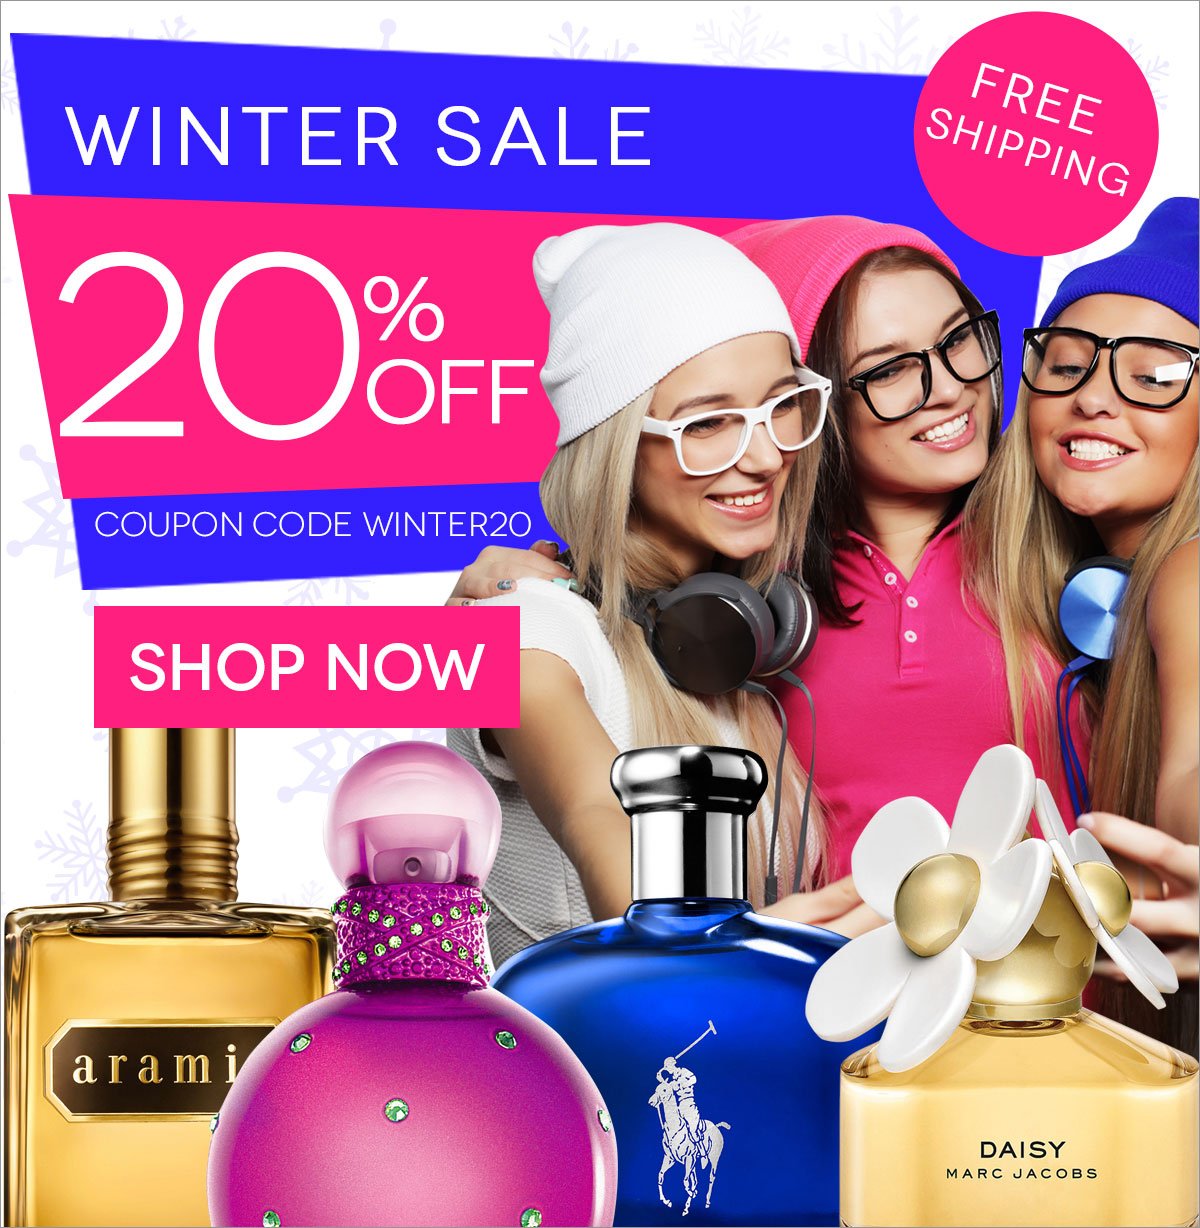 Perfume.com Winter Sale